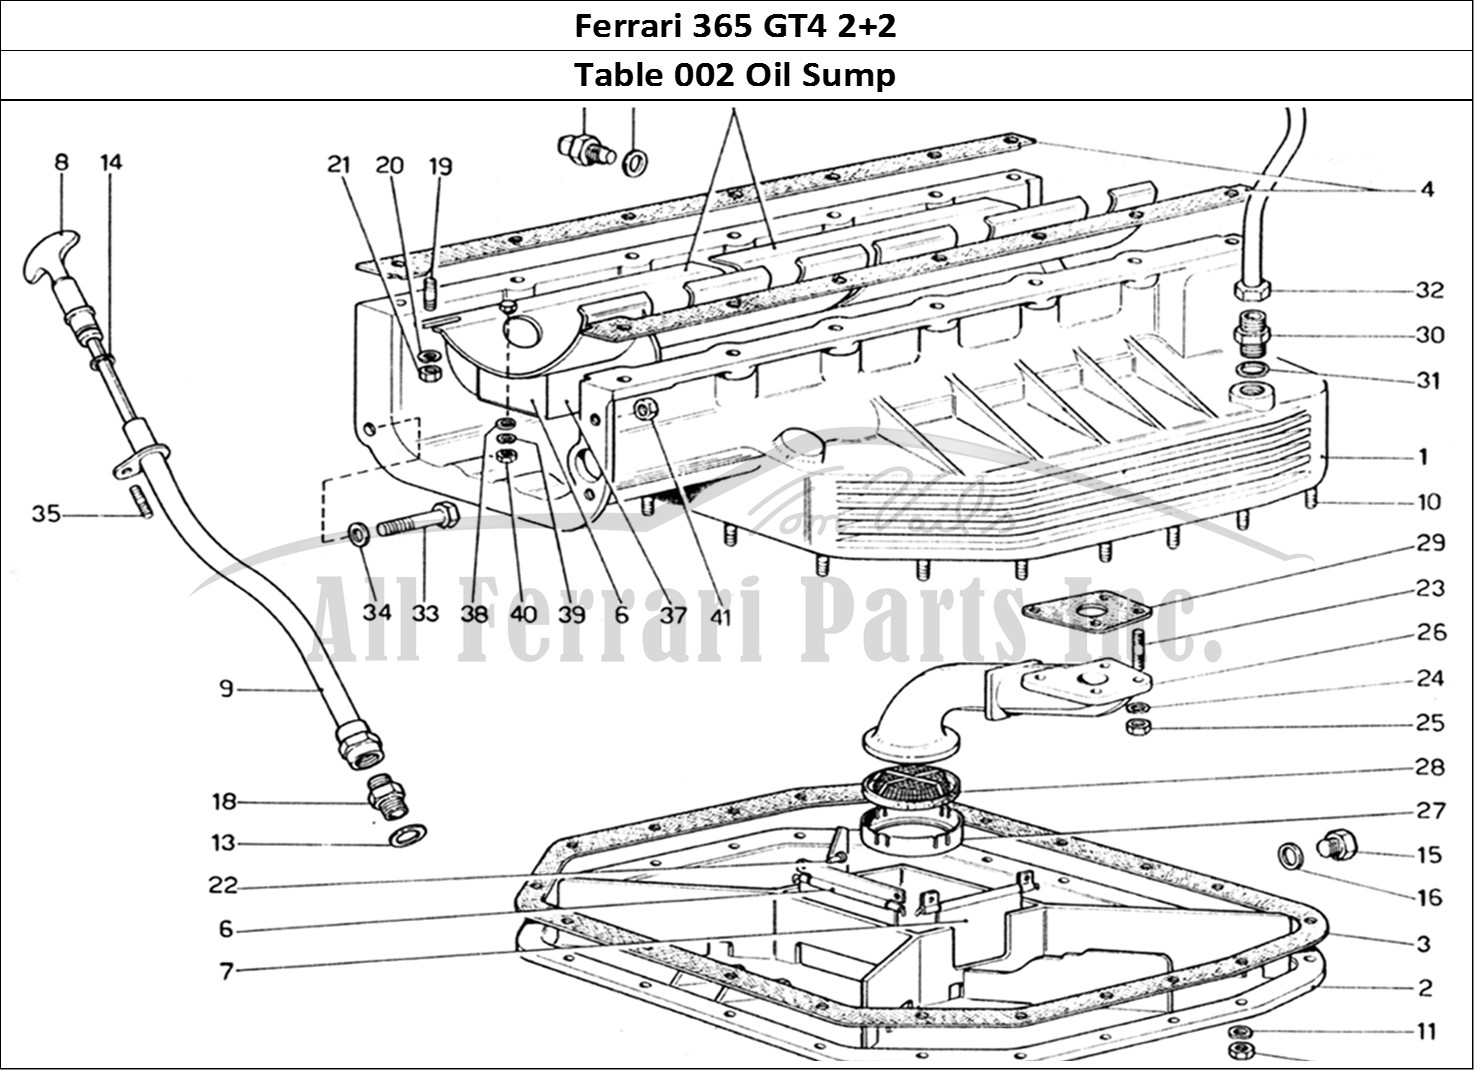 Ferrari Parts Ferrari 365 GT4 2+2 (1973) Page 002 Oil Sump